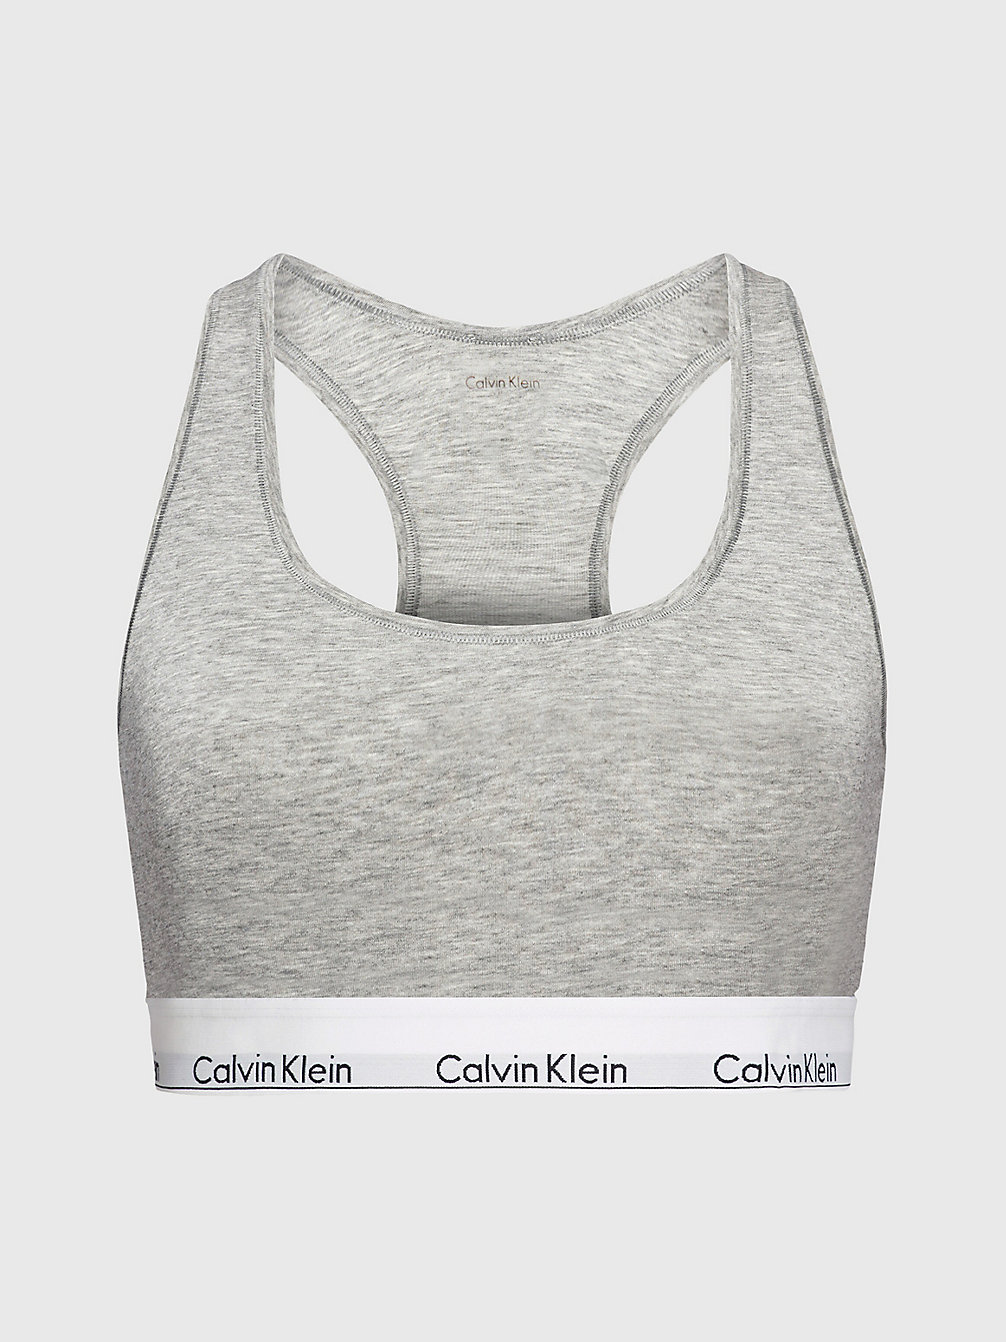 Corpiño De Talla Grande – Modern Cotton > GREY HEATHER > undefined mujer > Calvin Klein